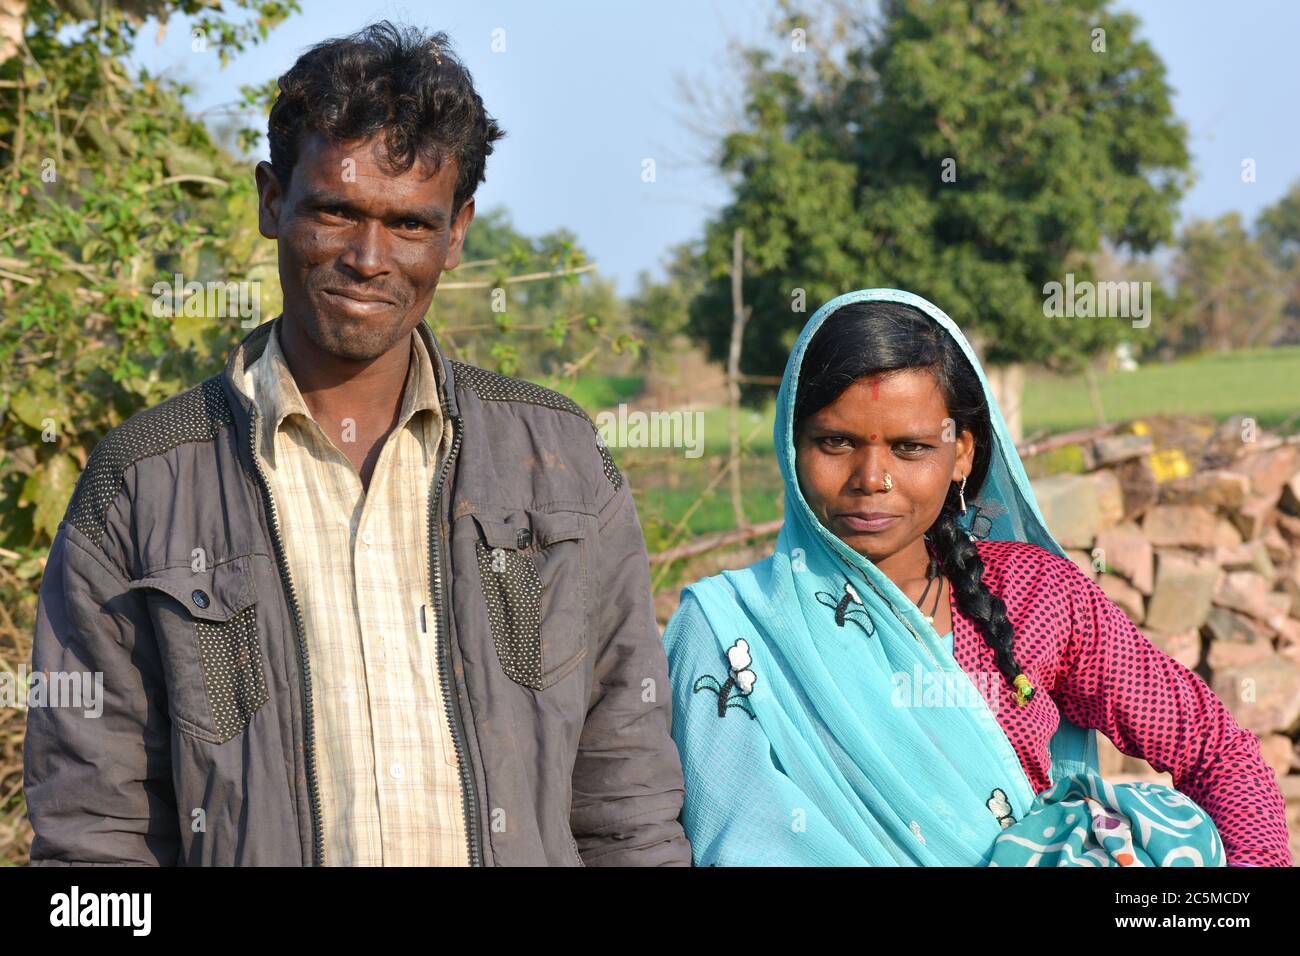 TIKAMGARH, MADHYA PRADESH, INDIA - FEBRUARY 08, 2020: Young indian village man and woman couple smiling and looking at the camera. Stock Photo